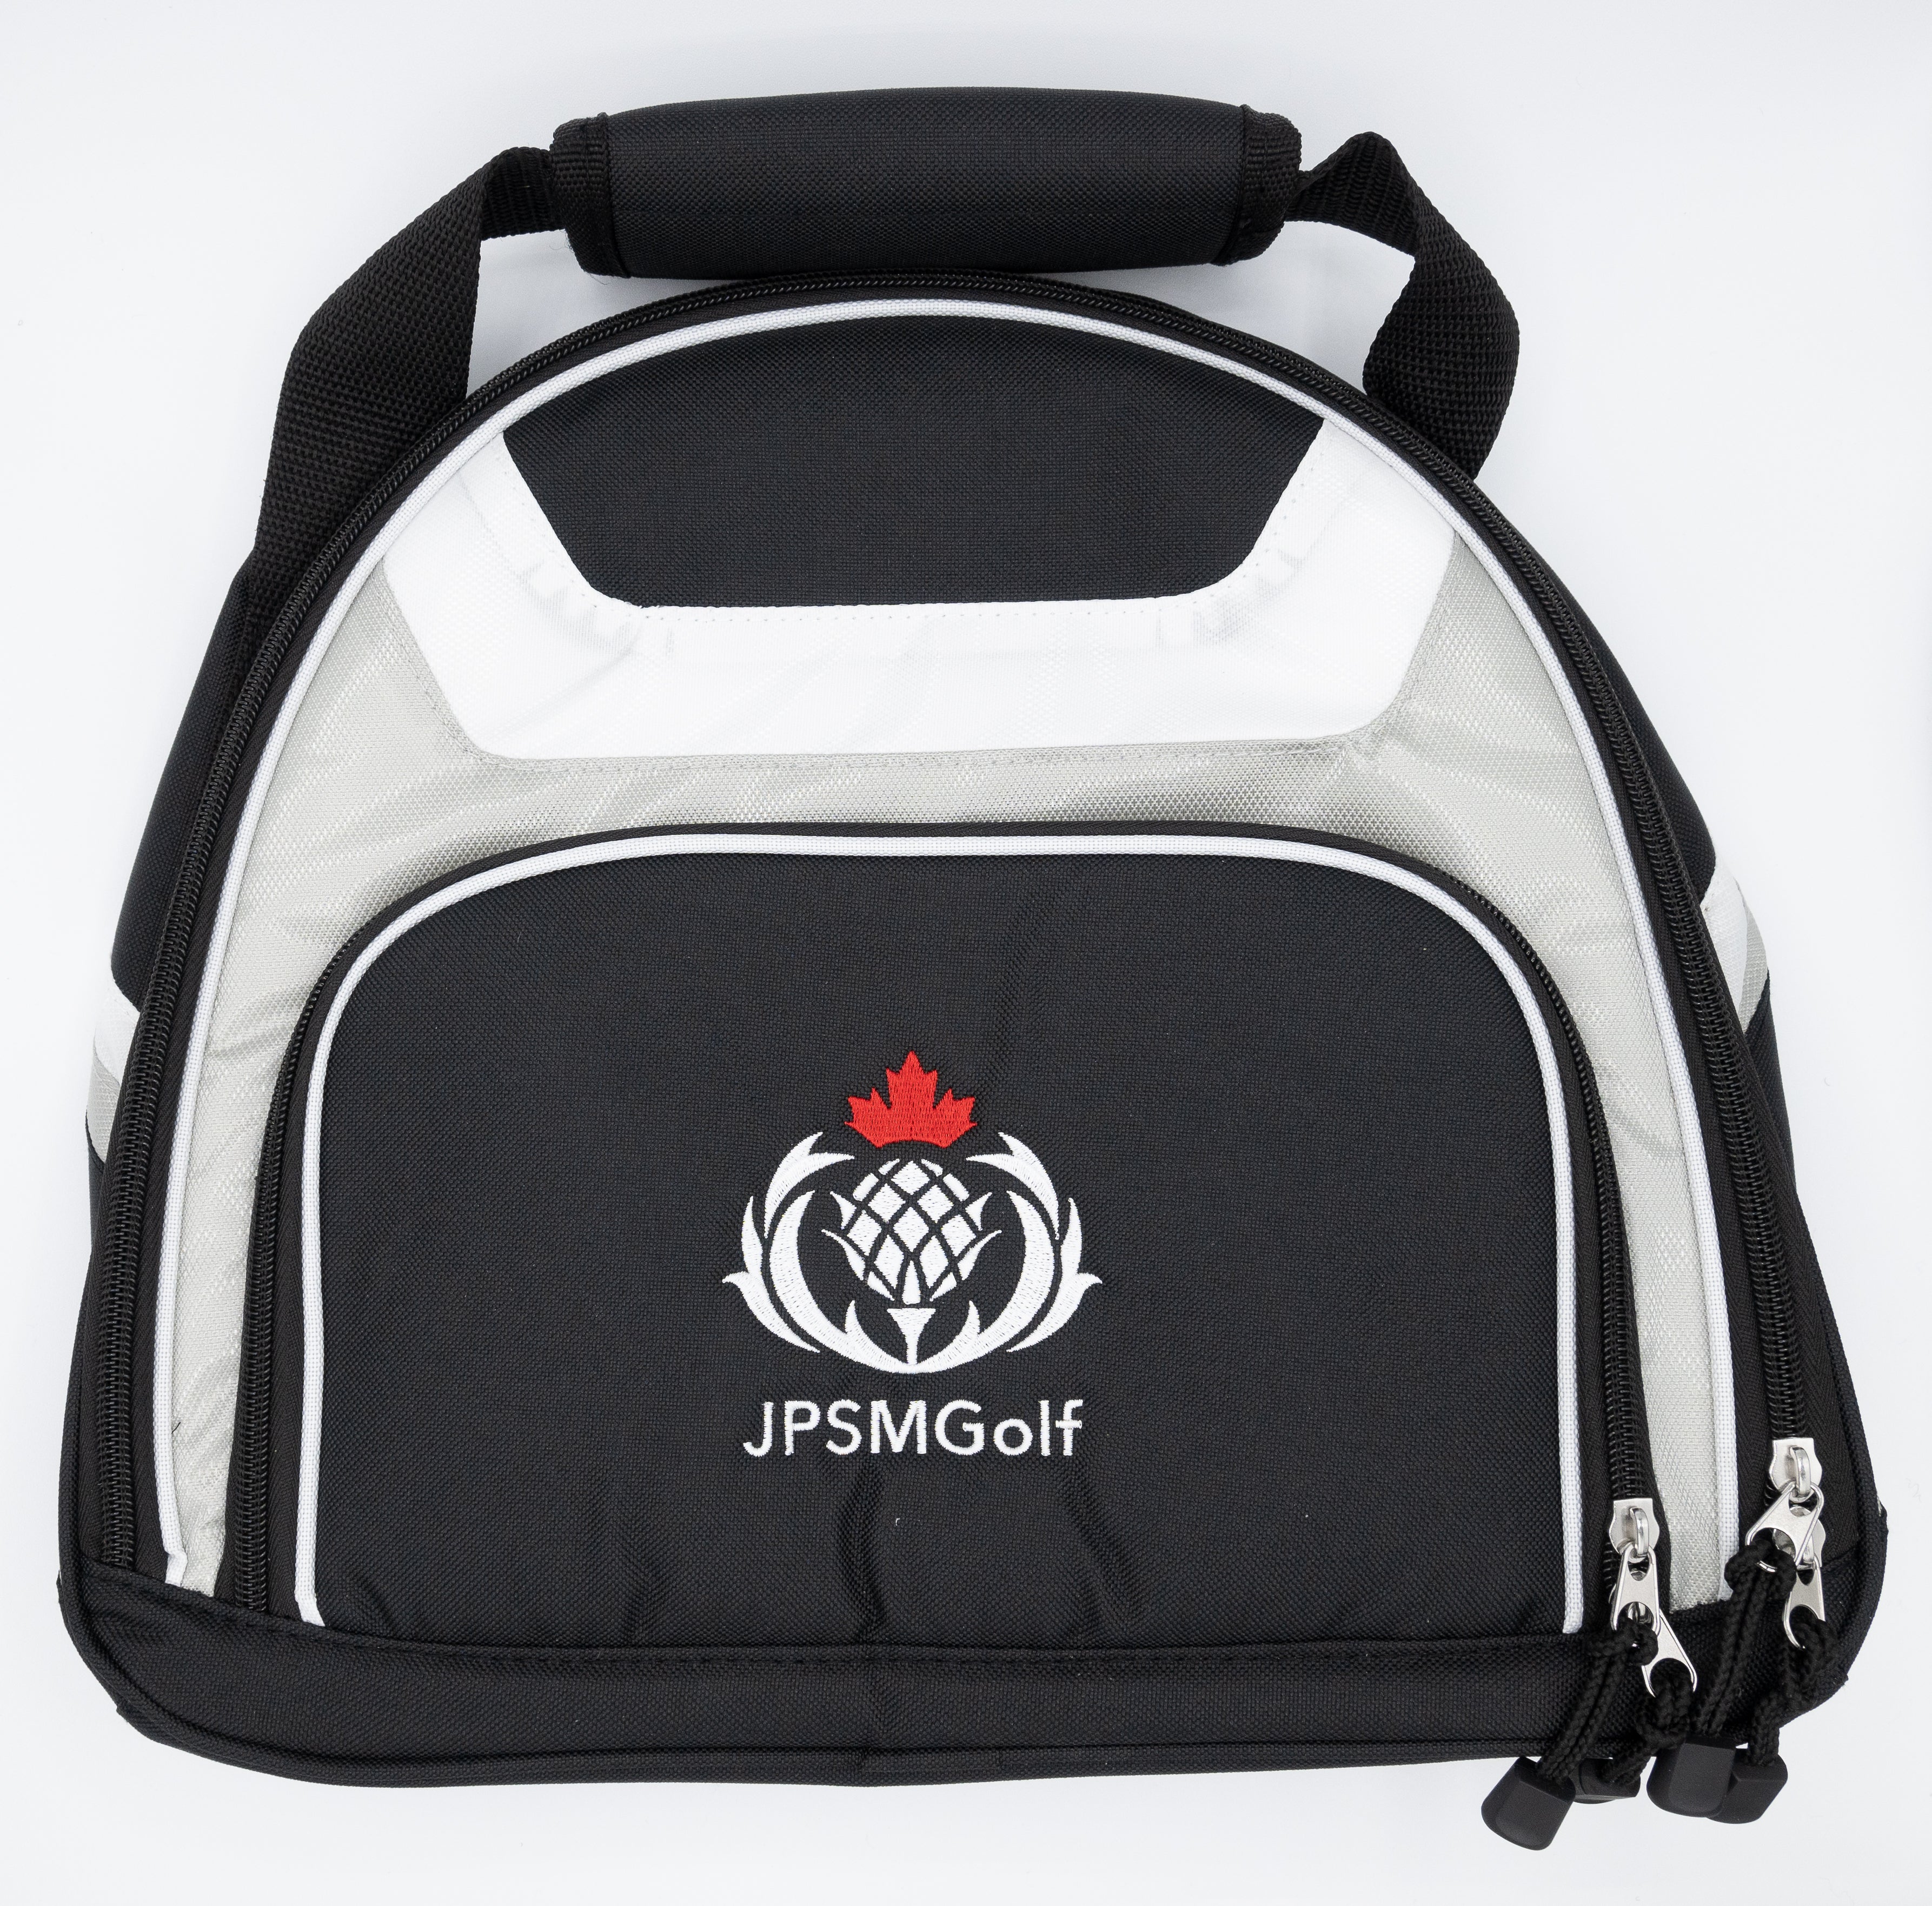 Caddy Tote Bag (JPSMGolf)